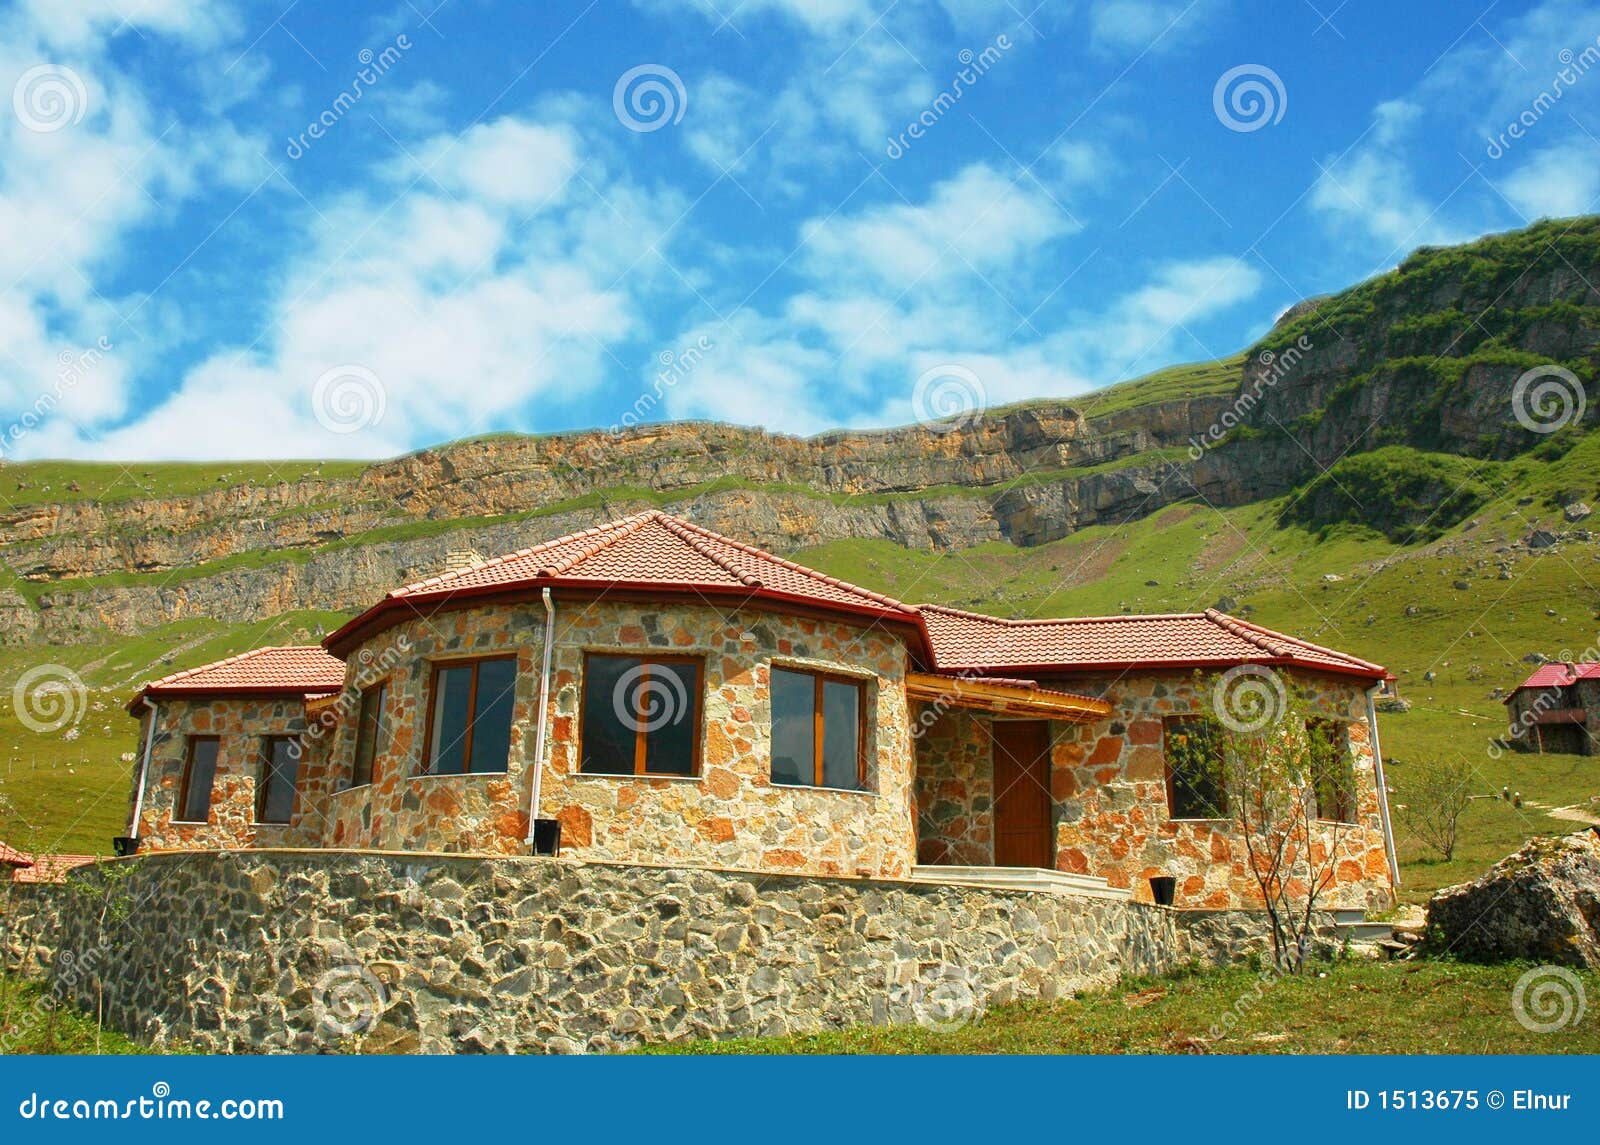 house-mountains-1513675.jpg